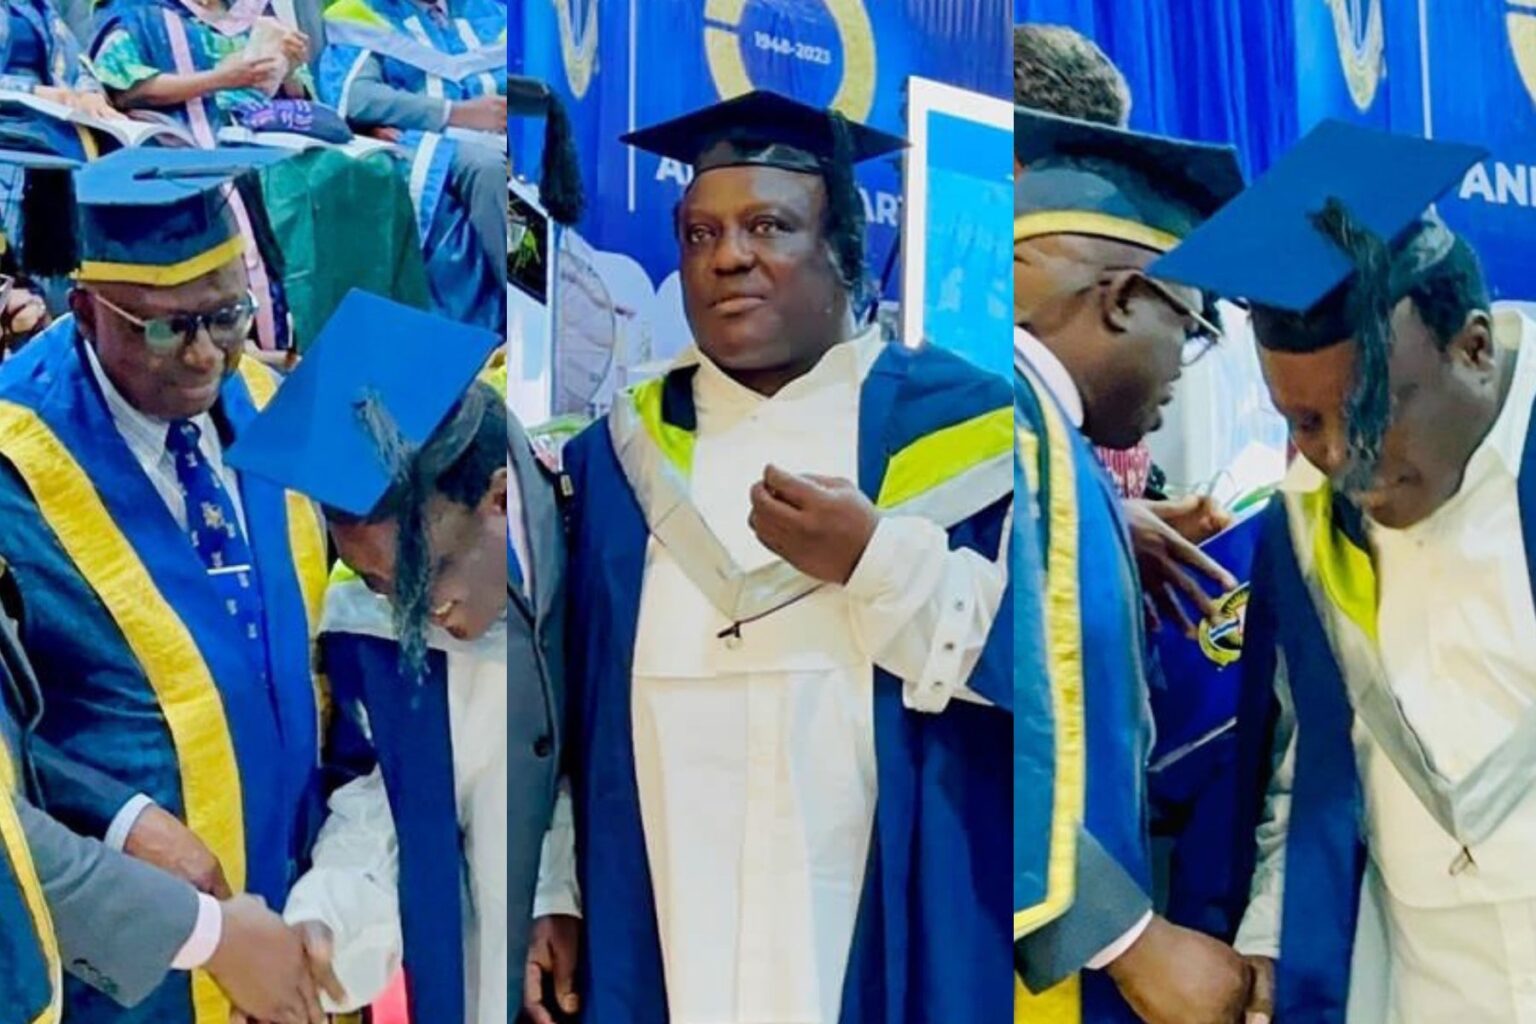 Saheed-Osupa-rejoices-as-he-officially-graduates-from-the-University-of-Ibadan-with-Second-Class-Kemi-Filani-blog-min-1536x1024-1.jpg